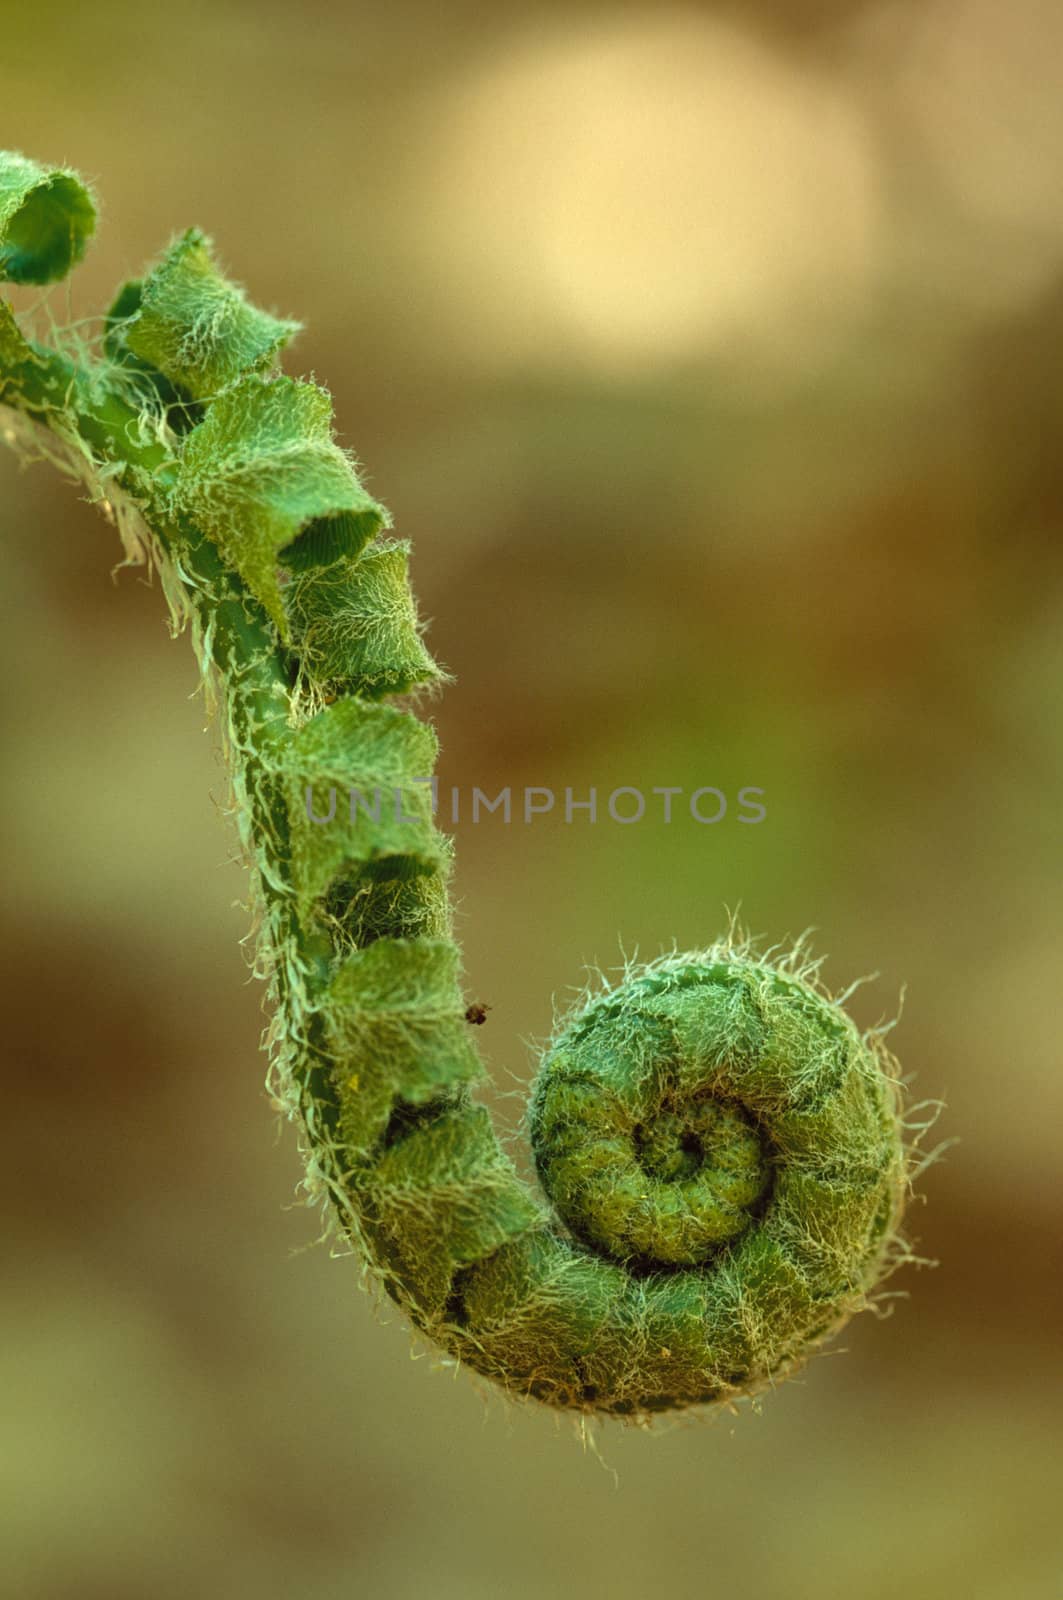 A single fern fiddlehead close-up